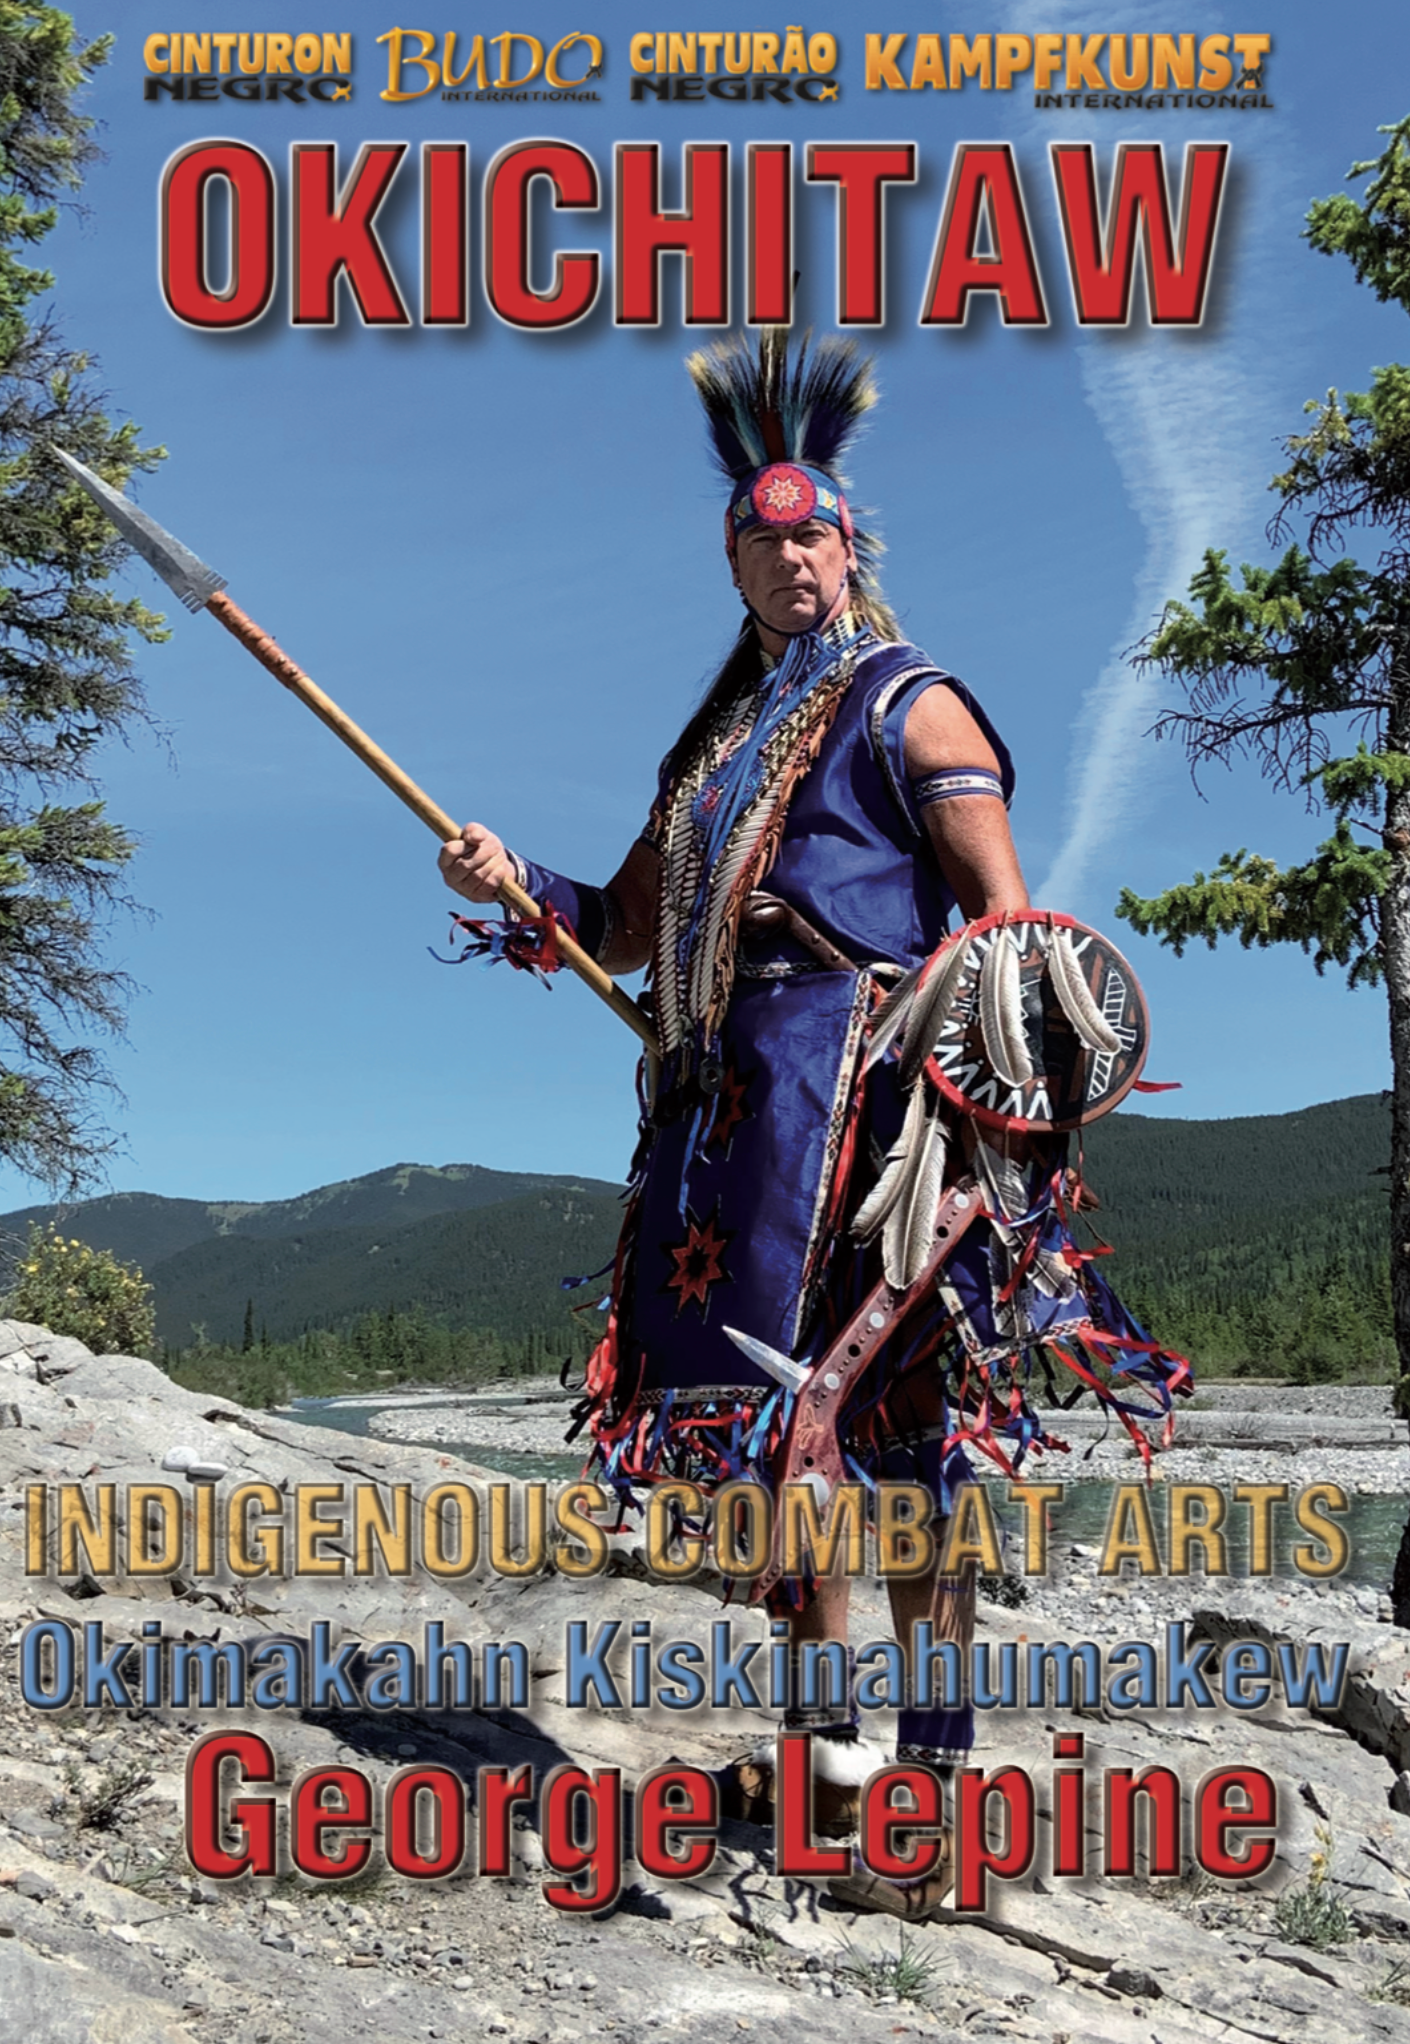 Okichitaw Indigenous Combat Art By George Lepine (On Demand)